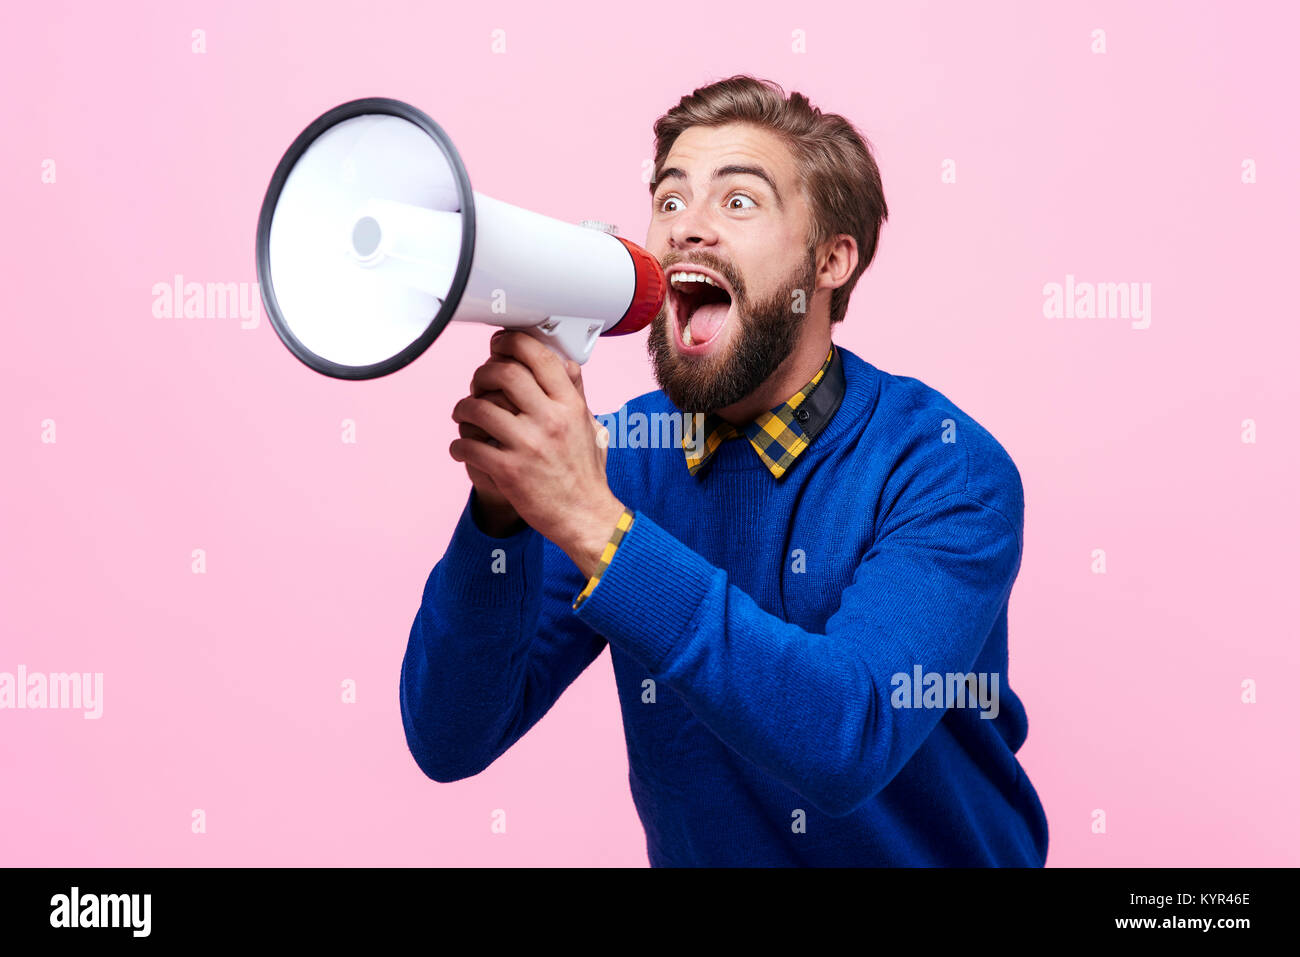 Man yelling into a megaphone Stock Photo